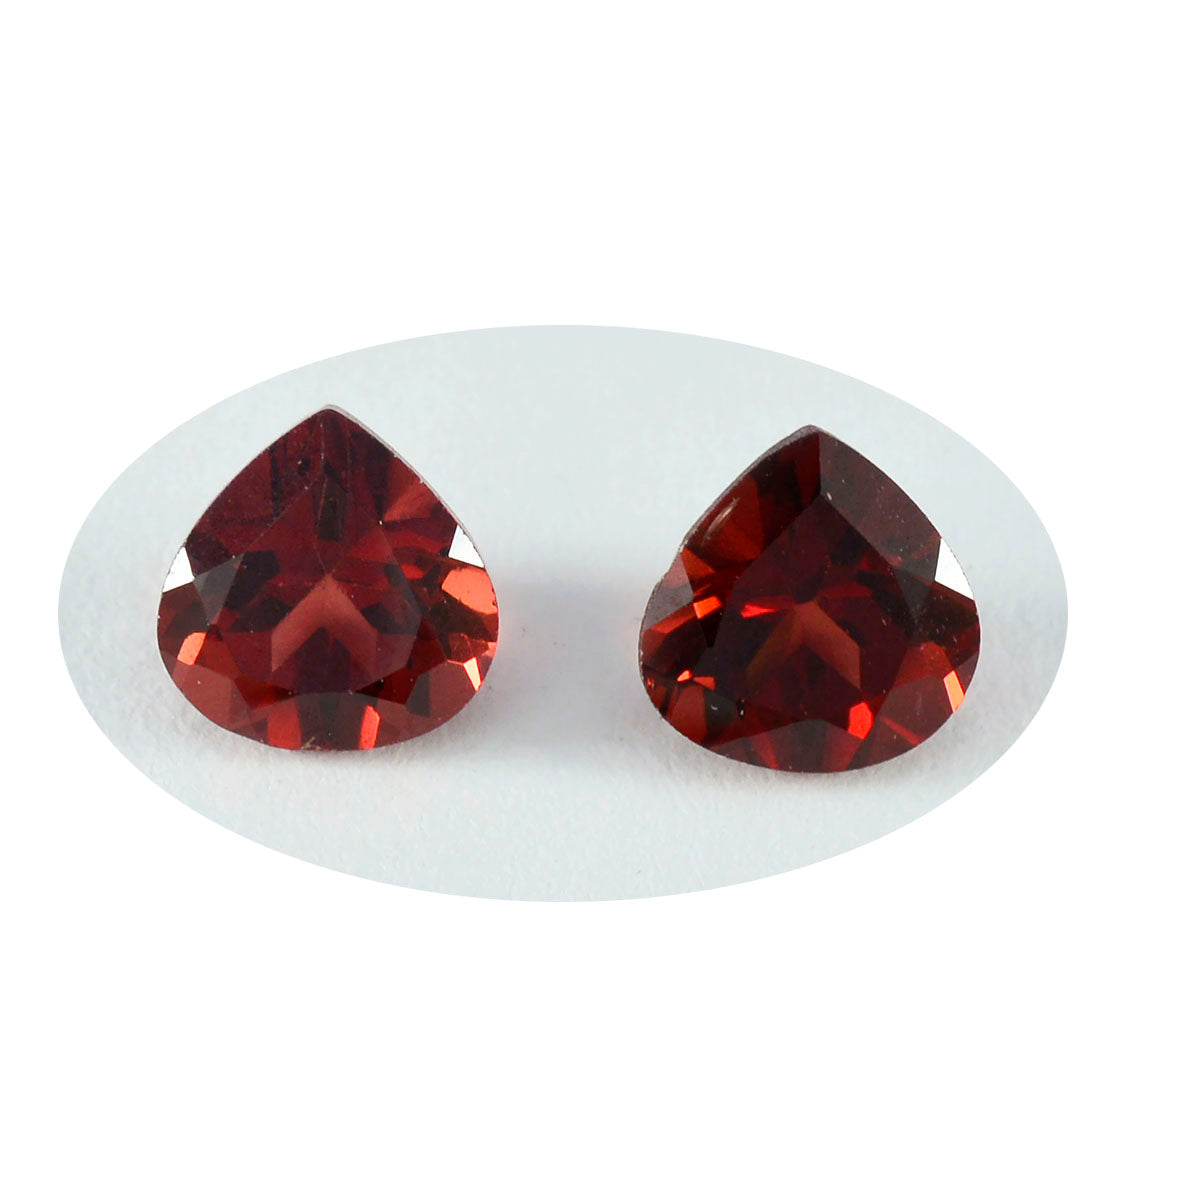 Riyogems 1PC Real Red Garnet Faceted 11x11 mm Heart Shape fantastic Quality Gemstone